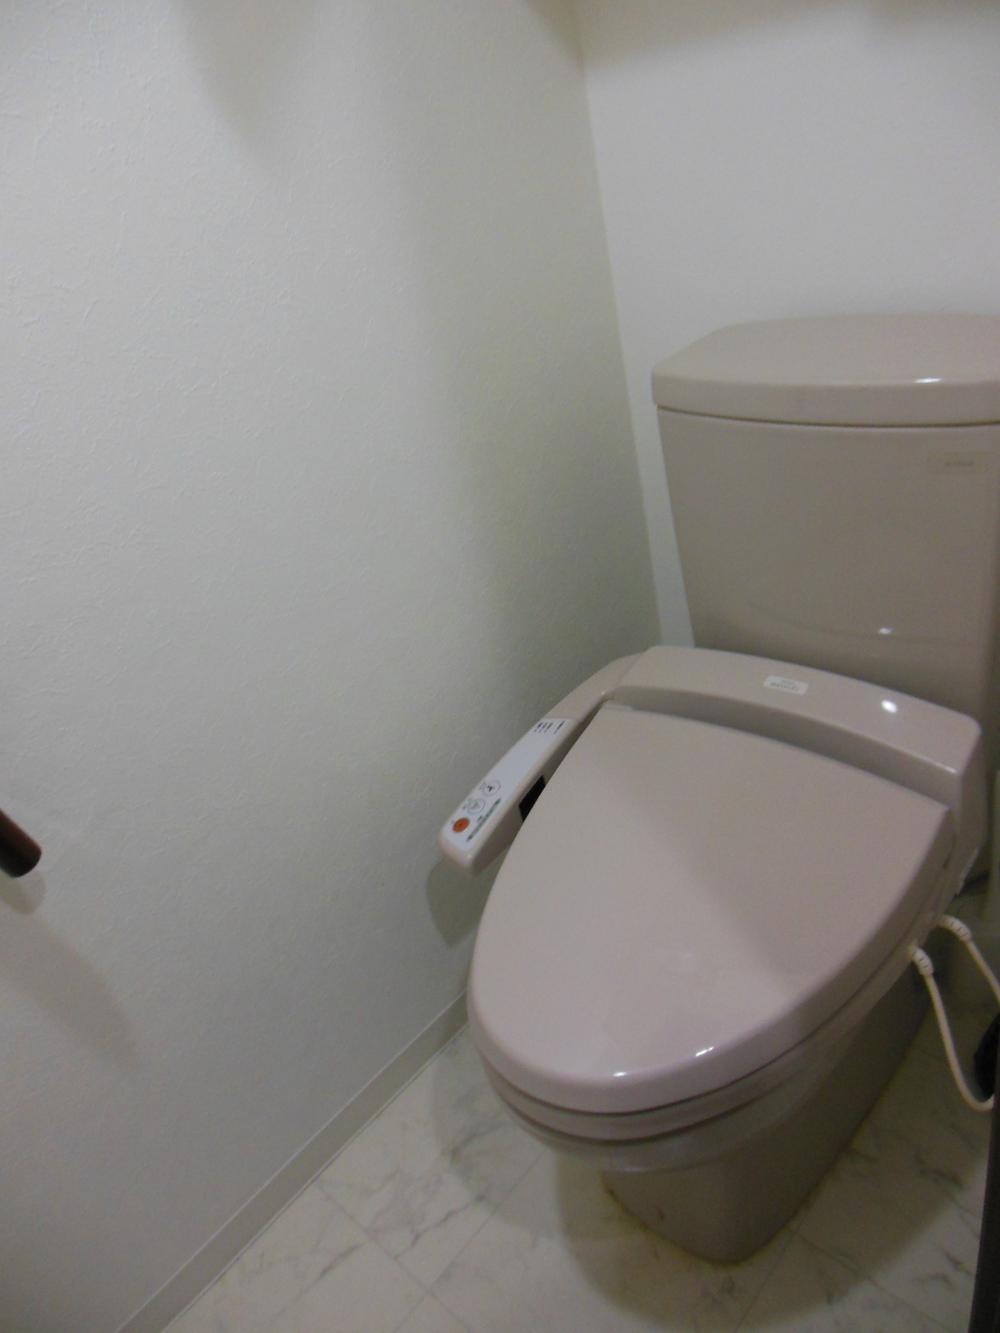 Toilet. Toilet (January 2014) Shooting